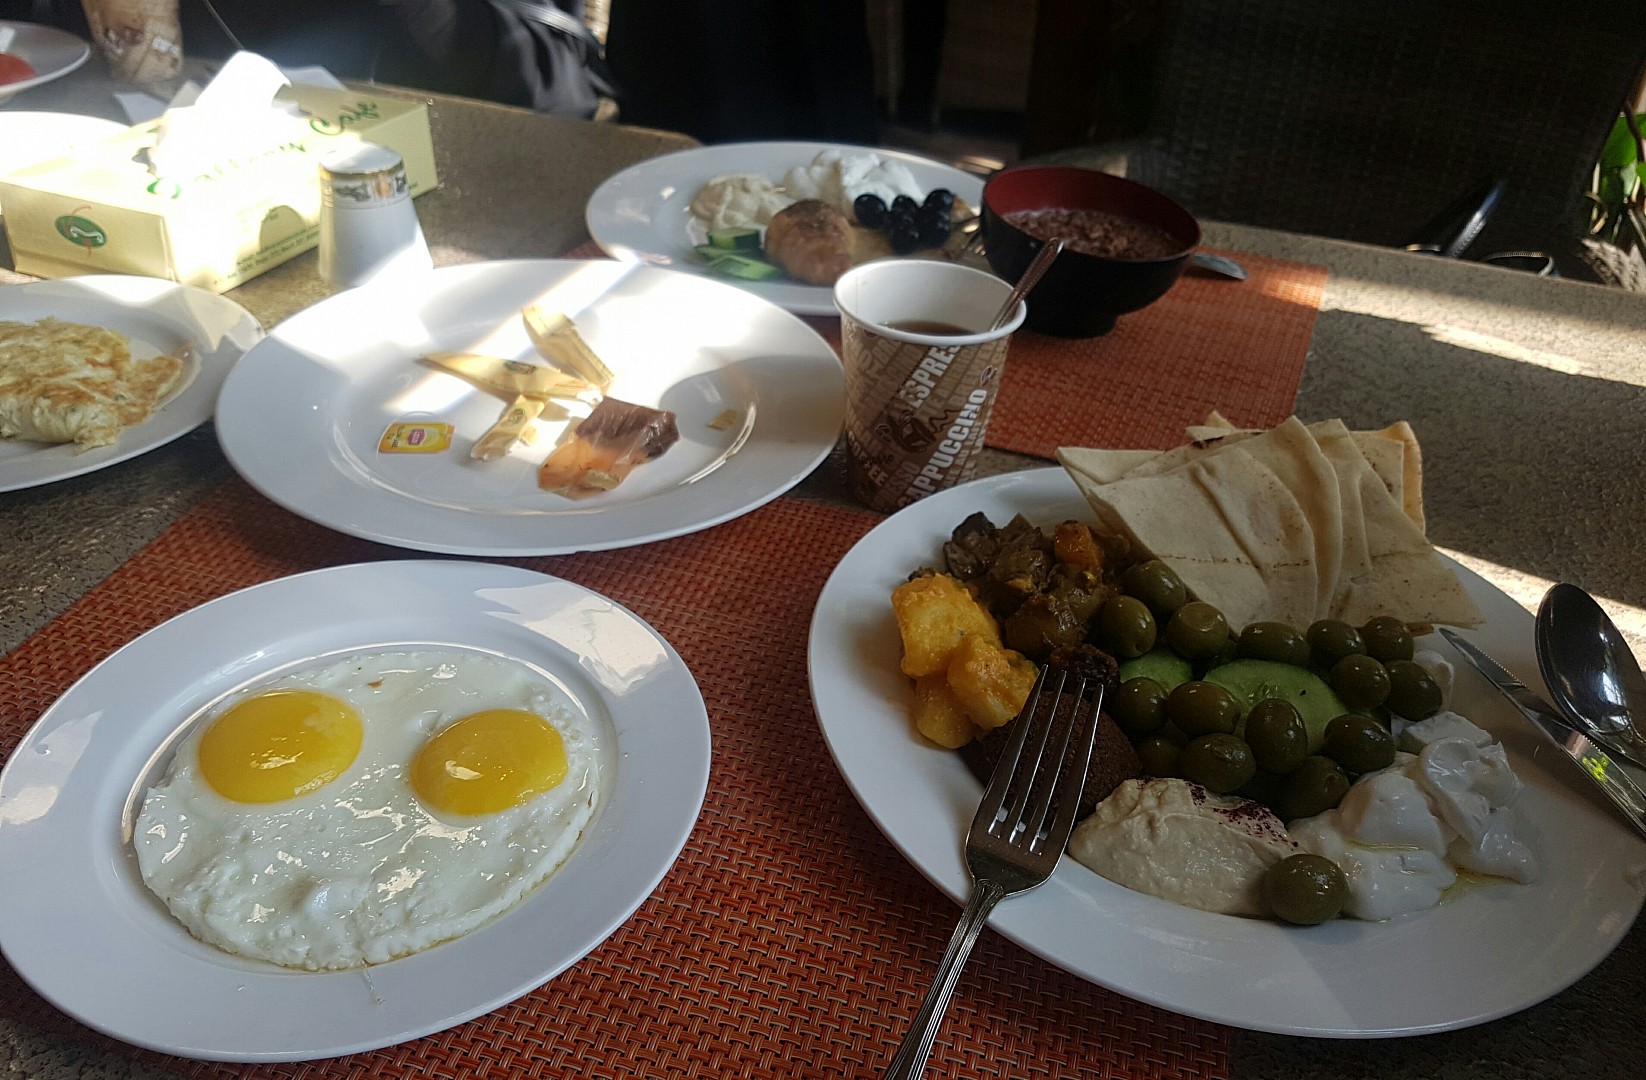 Breakfast buffet. 4.5 BD @ مقهى ومطعم الفرندا - البحرين